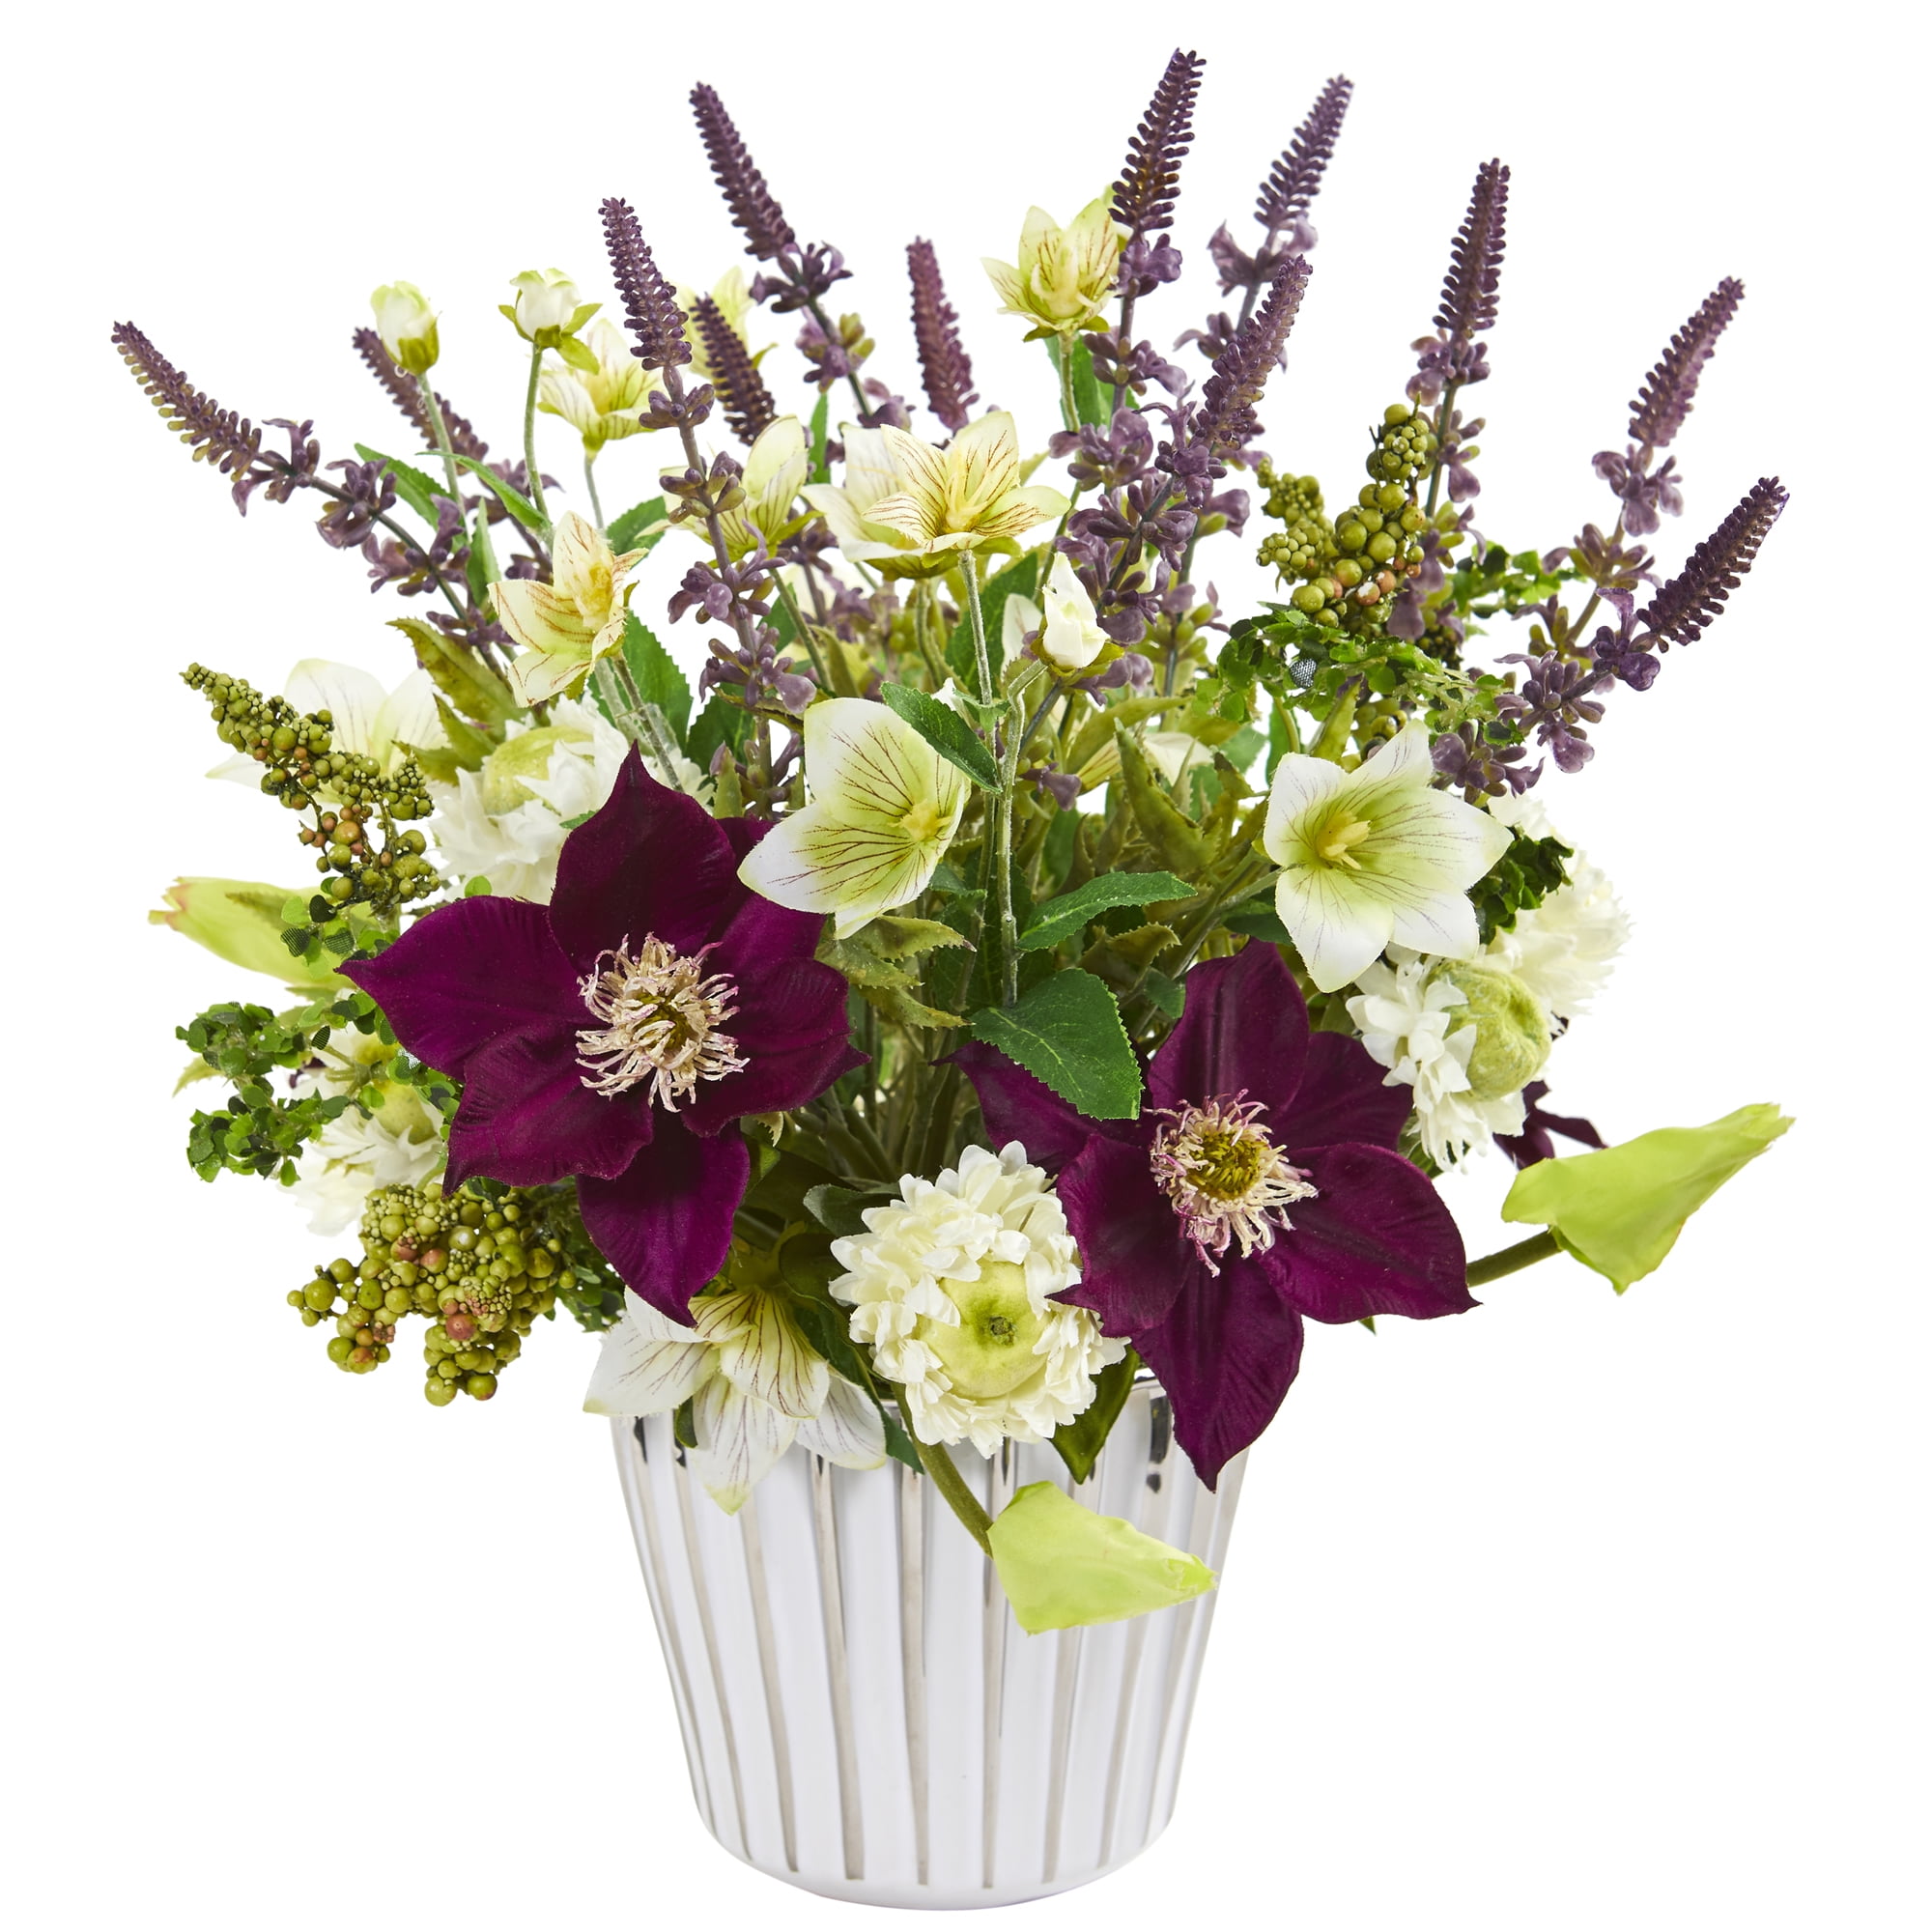 Mixed Artificial Flower Arrangement In Decorative Vase - Walmart.com